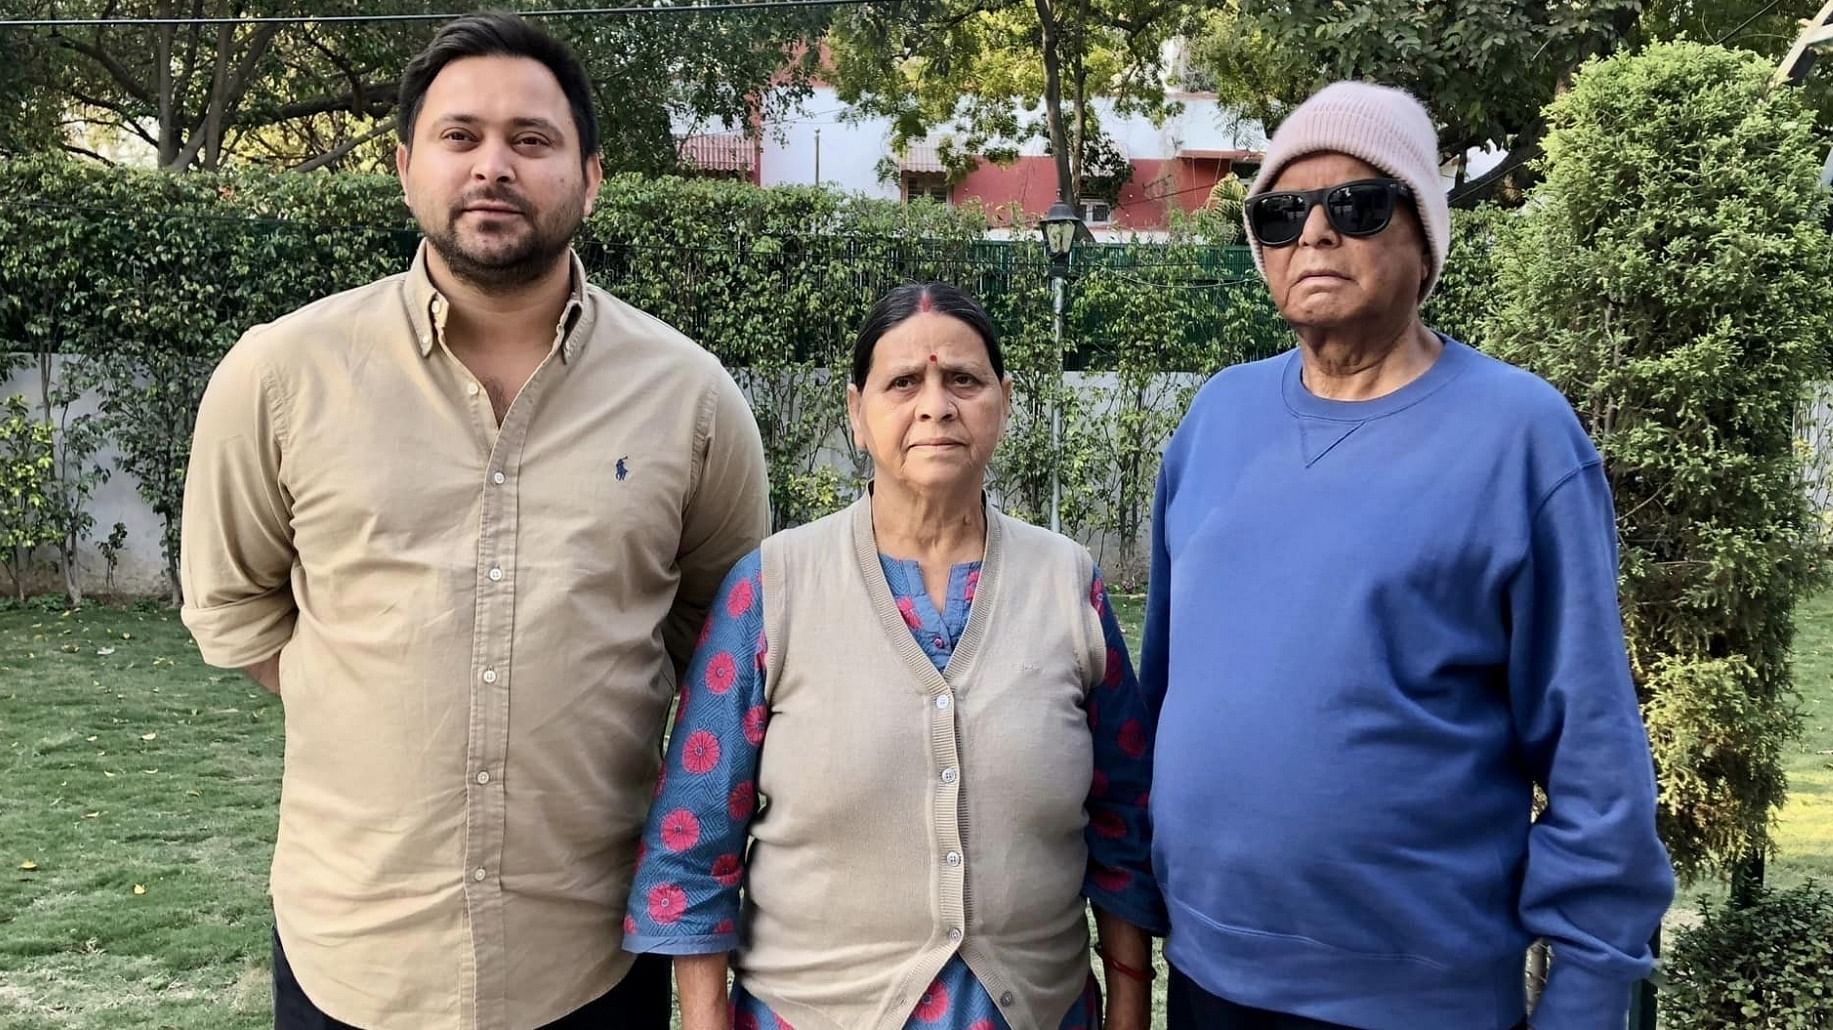 RJD chief Lalu Prasad Yadav with wife Rabri Devi and son Tejashwi yadav after the kidney transplant. Credit: IANS Photo